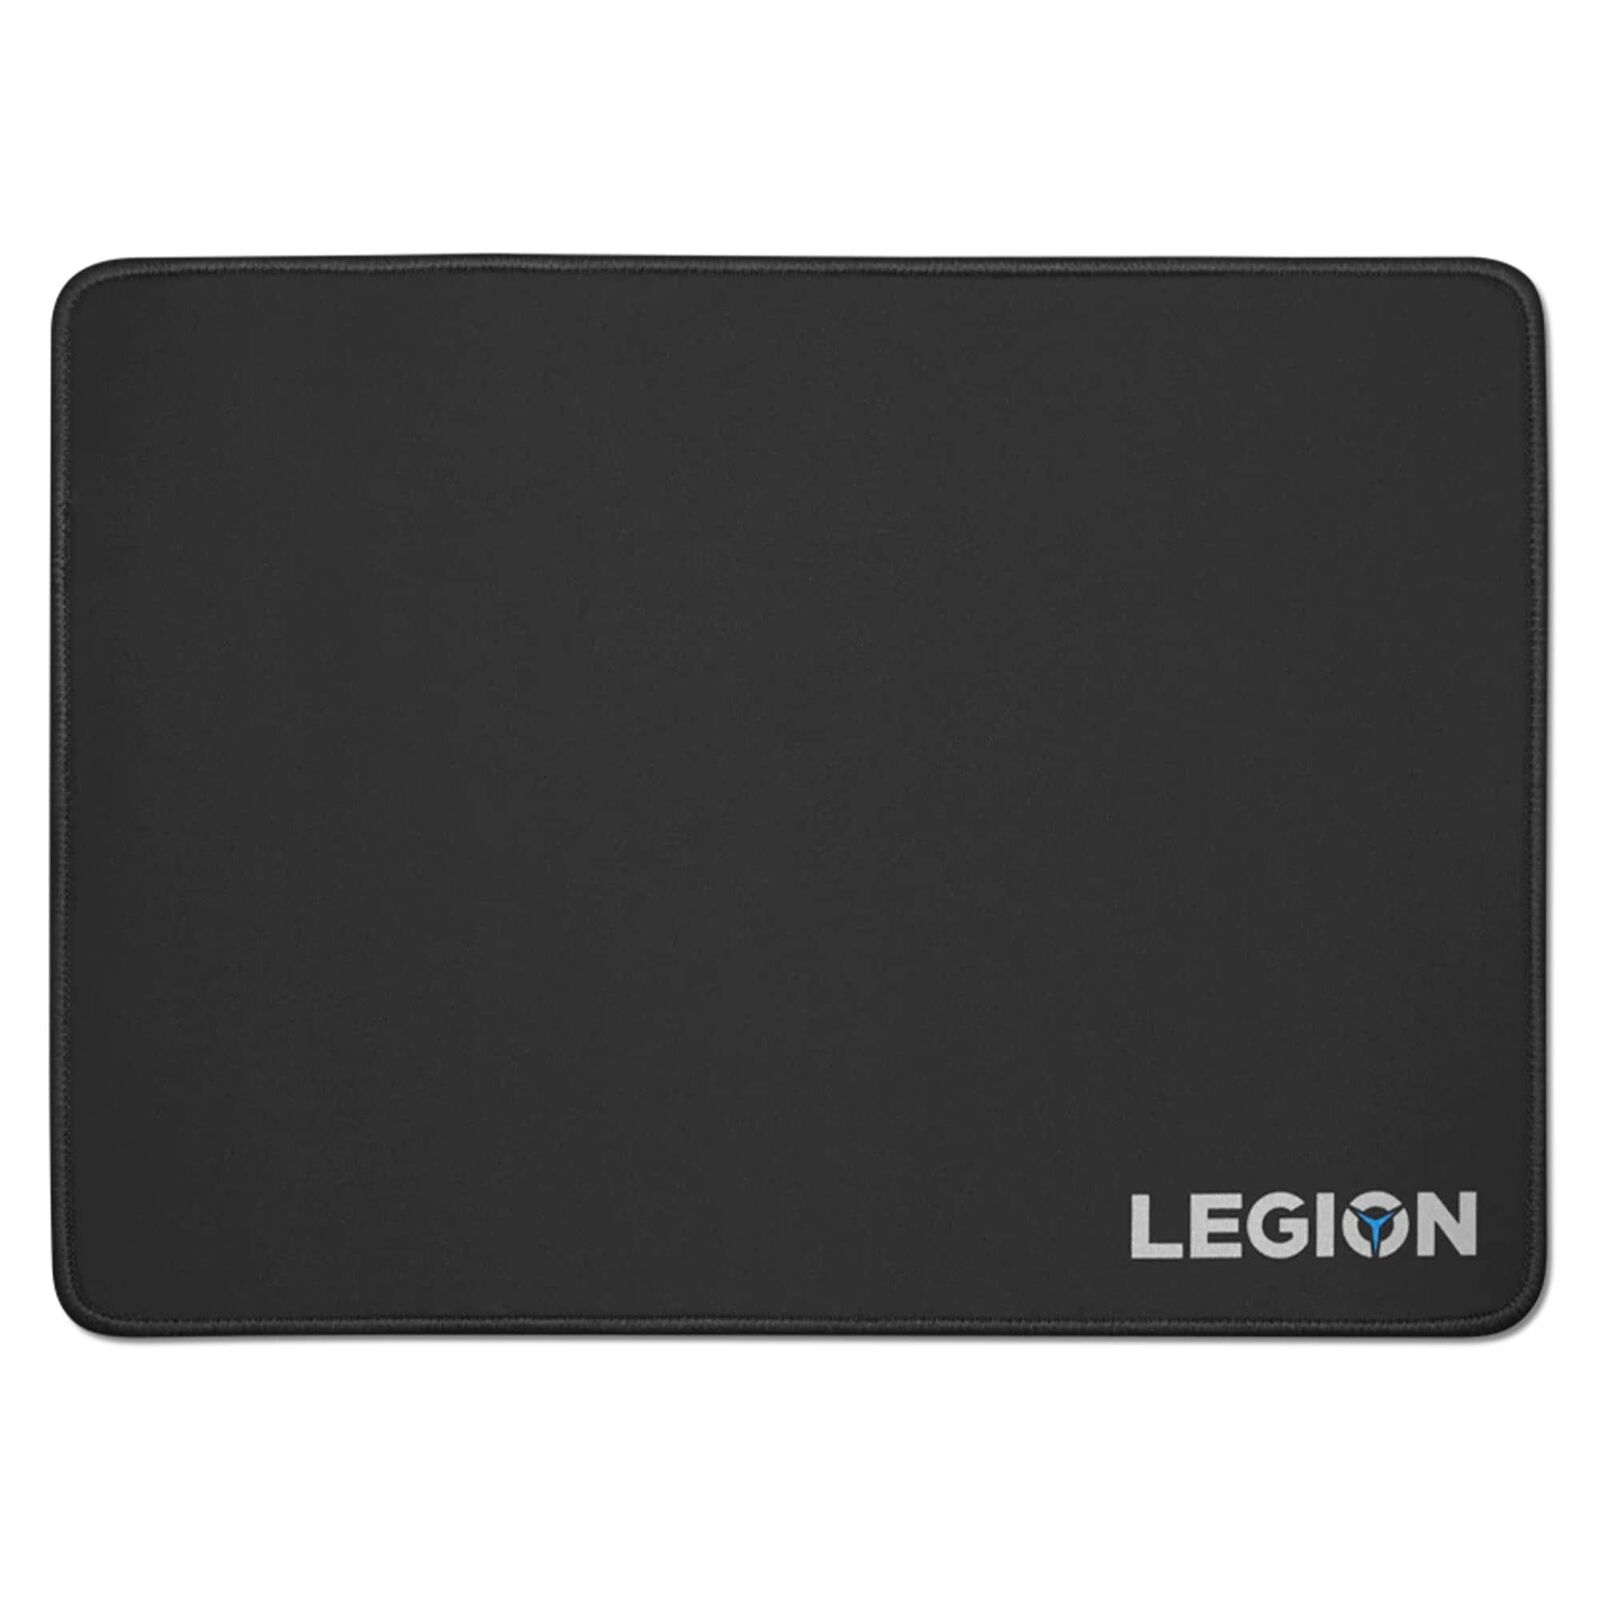 Lenovo Legion Gaming Speed Mouse Pad M